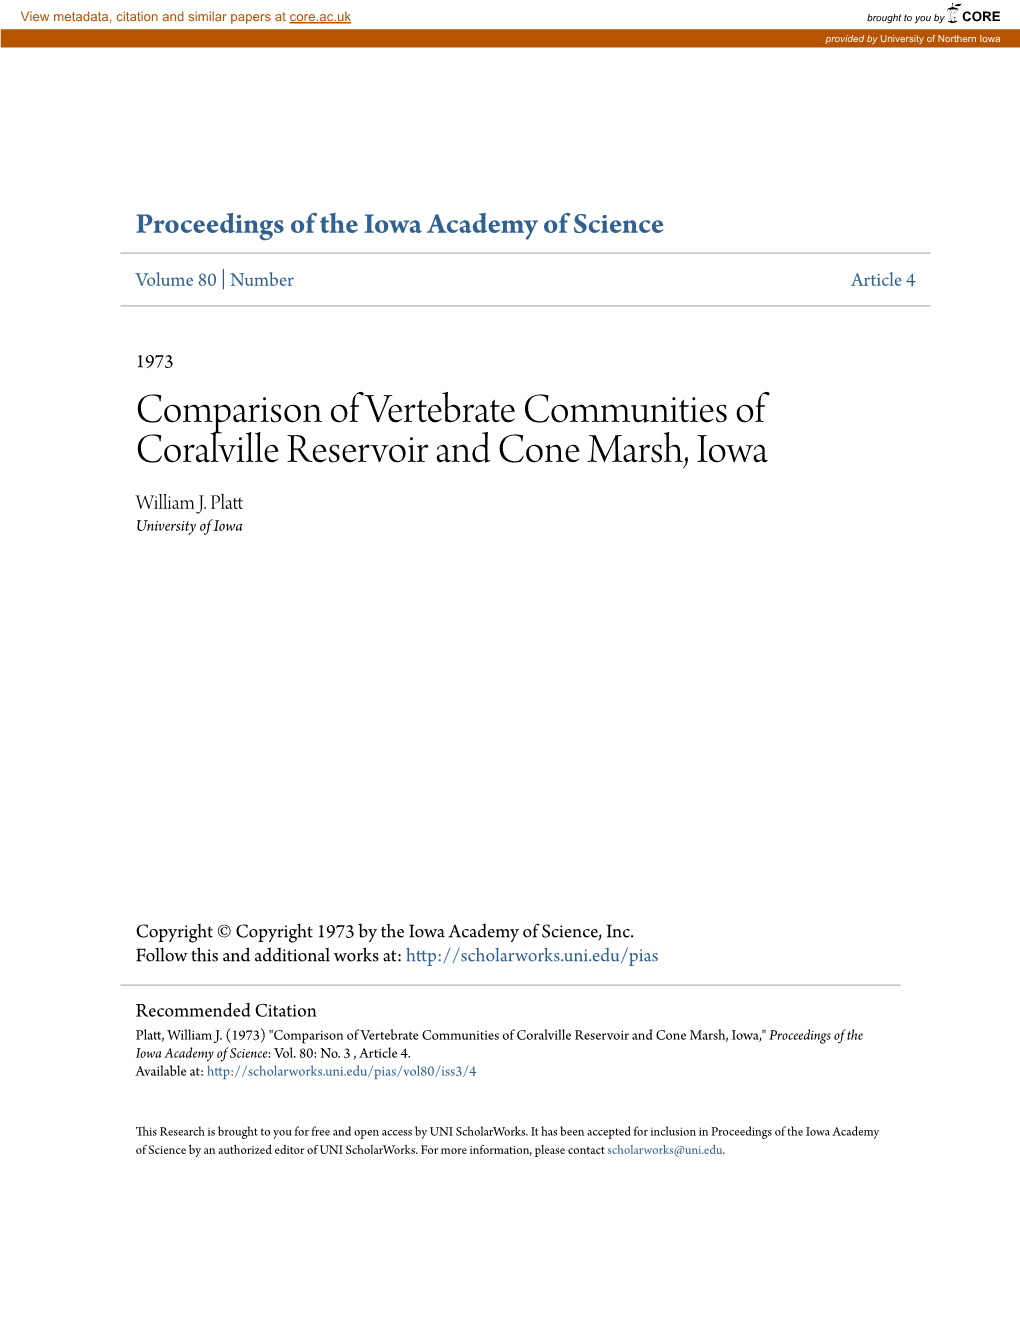 Comparison of Vertebrate Communities of Coralville Reservoir and Cone Marsh, Iowa William J